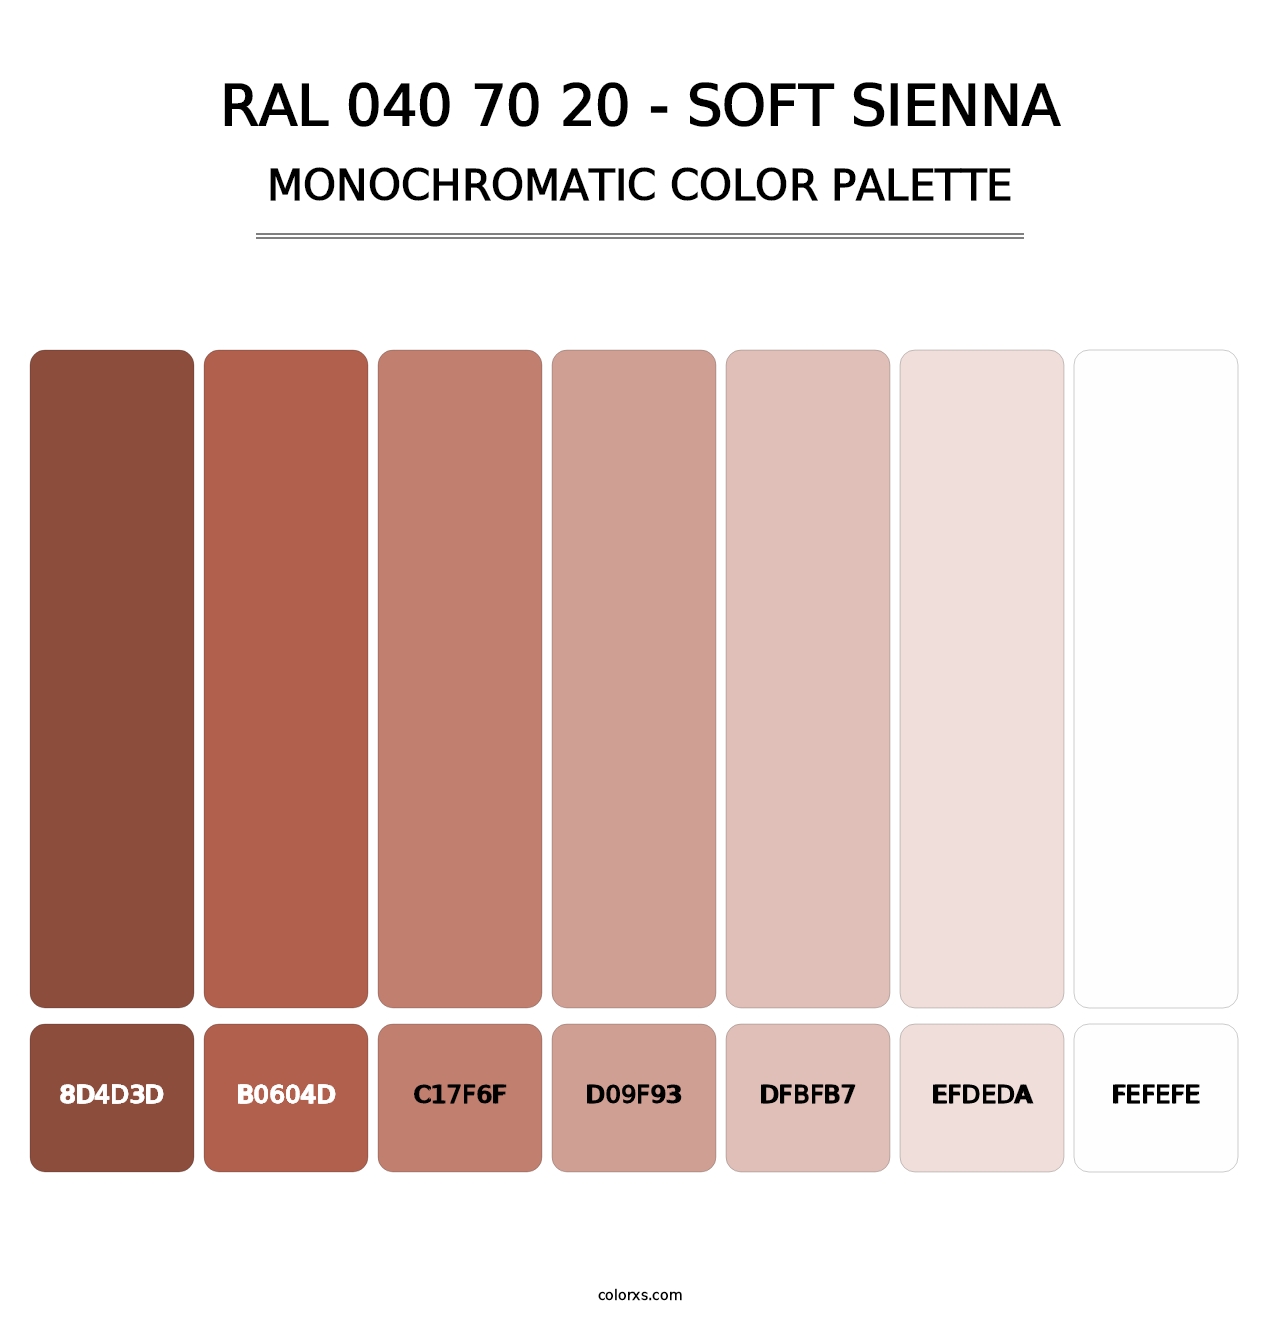 RAL 040 70 20 - Soft Sienna - Monochromatic Color Palette